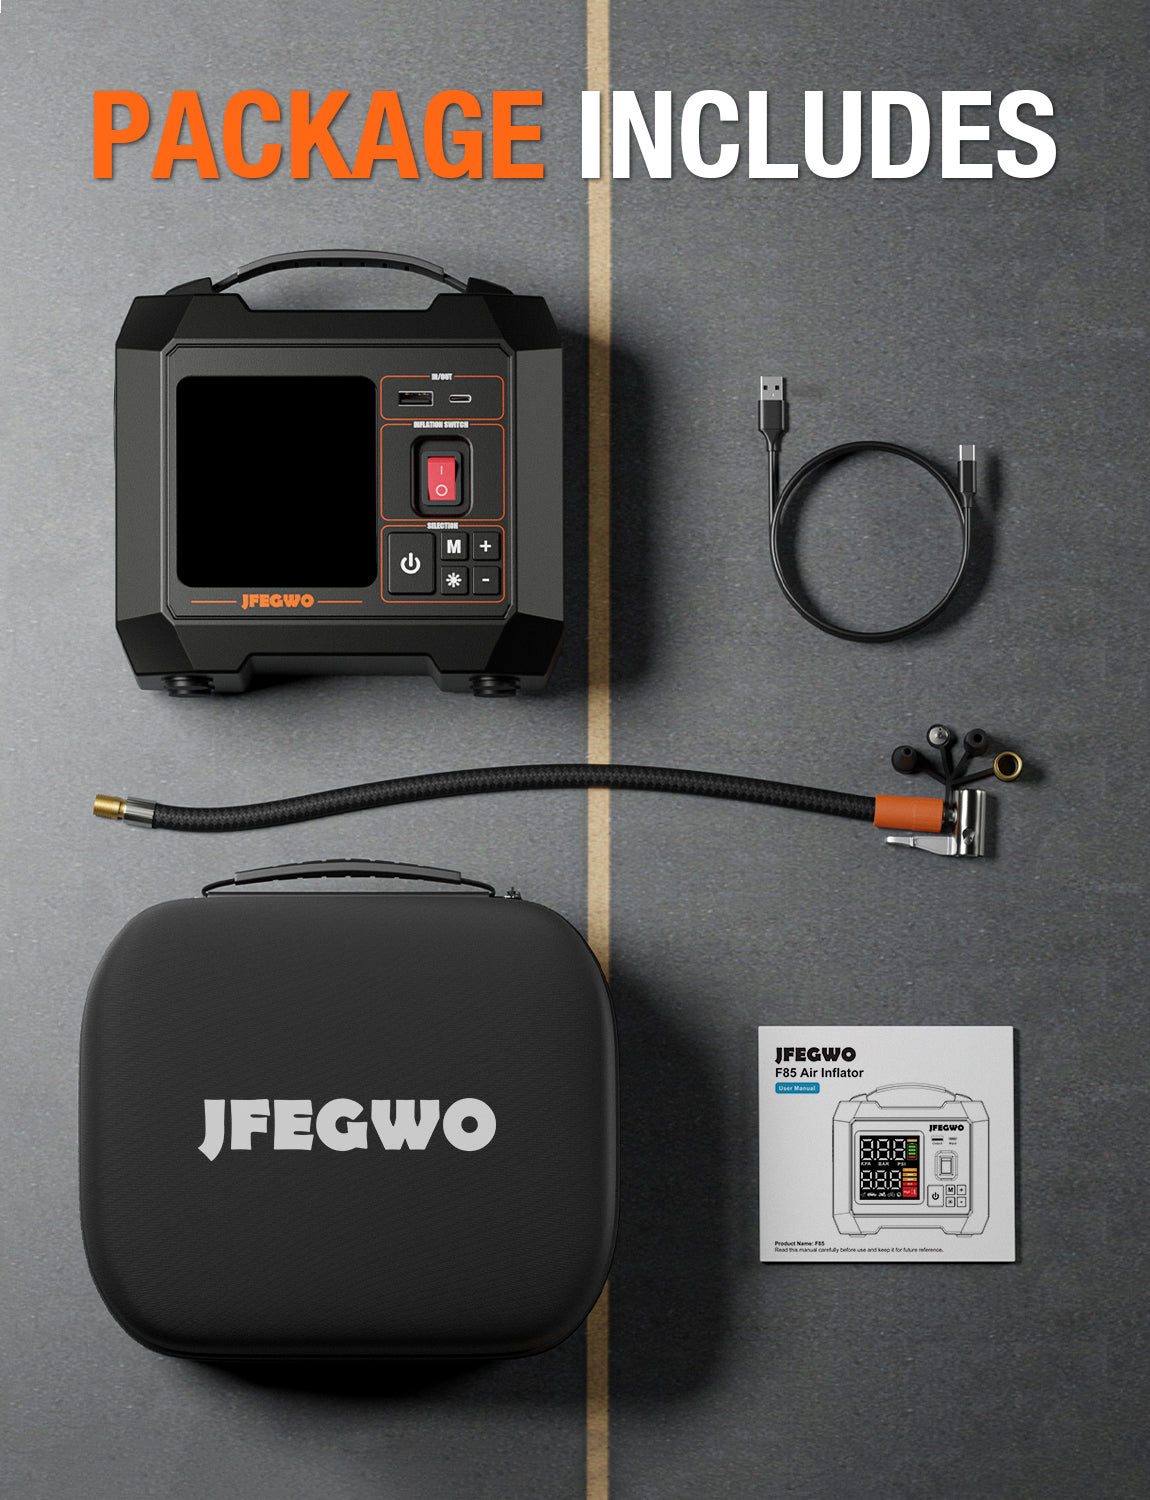 JF.EGWO JFEGWO Tire Inflator Portable Air compressor 300PSI Black - JF.EGWO